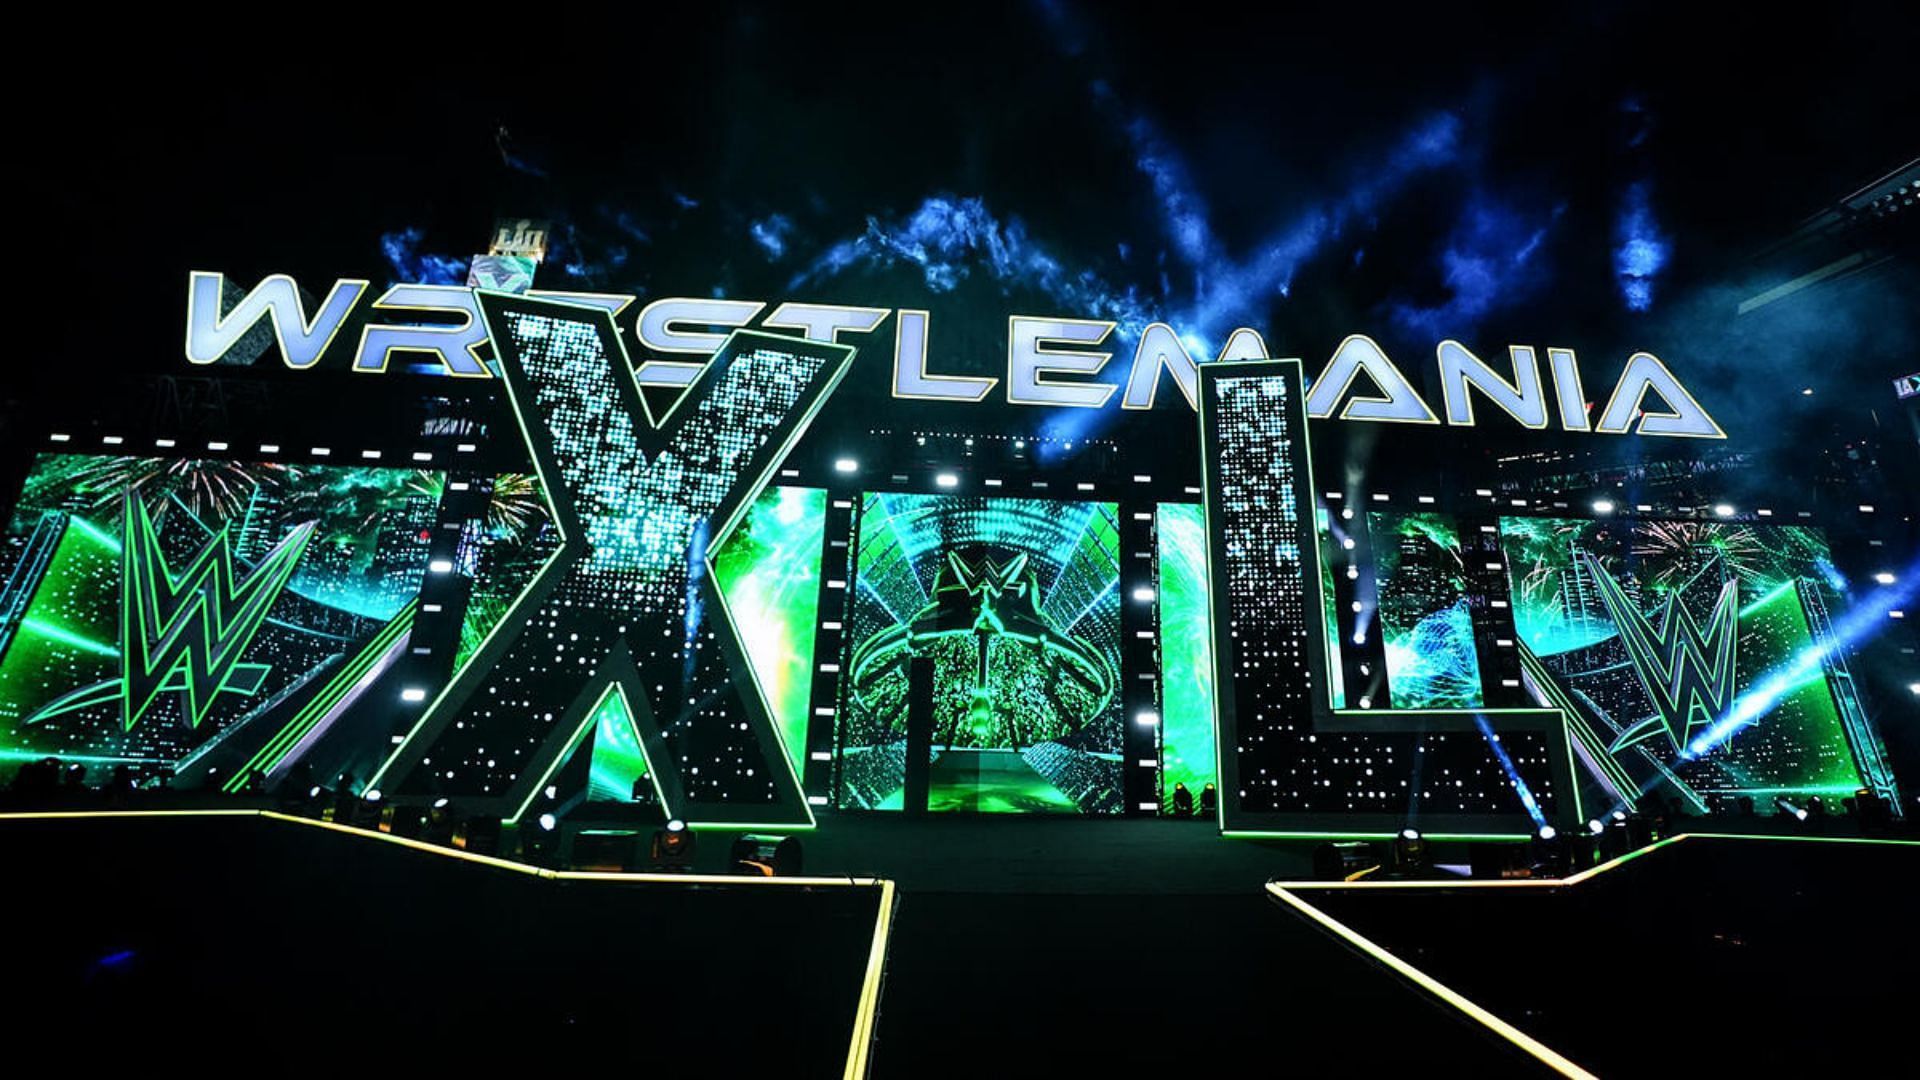 WrestleMania XL took place last weekend in Philadelphia.